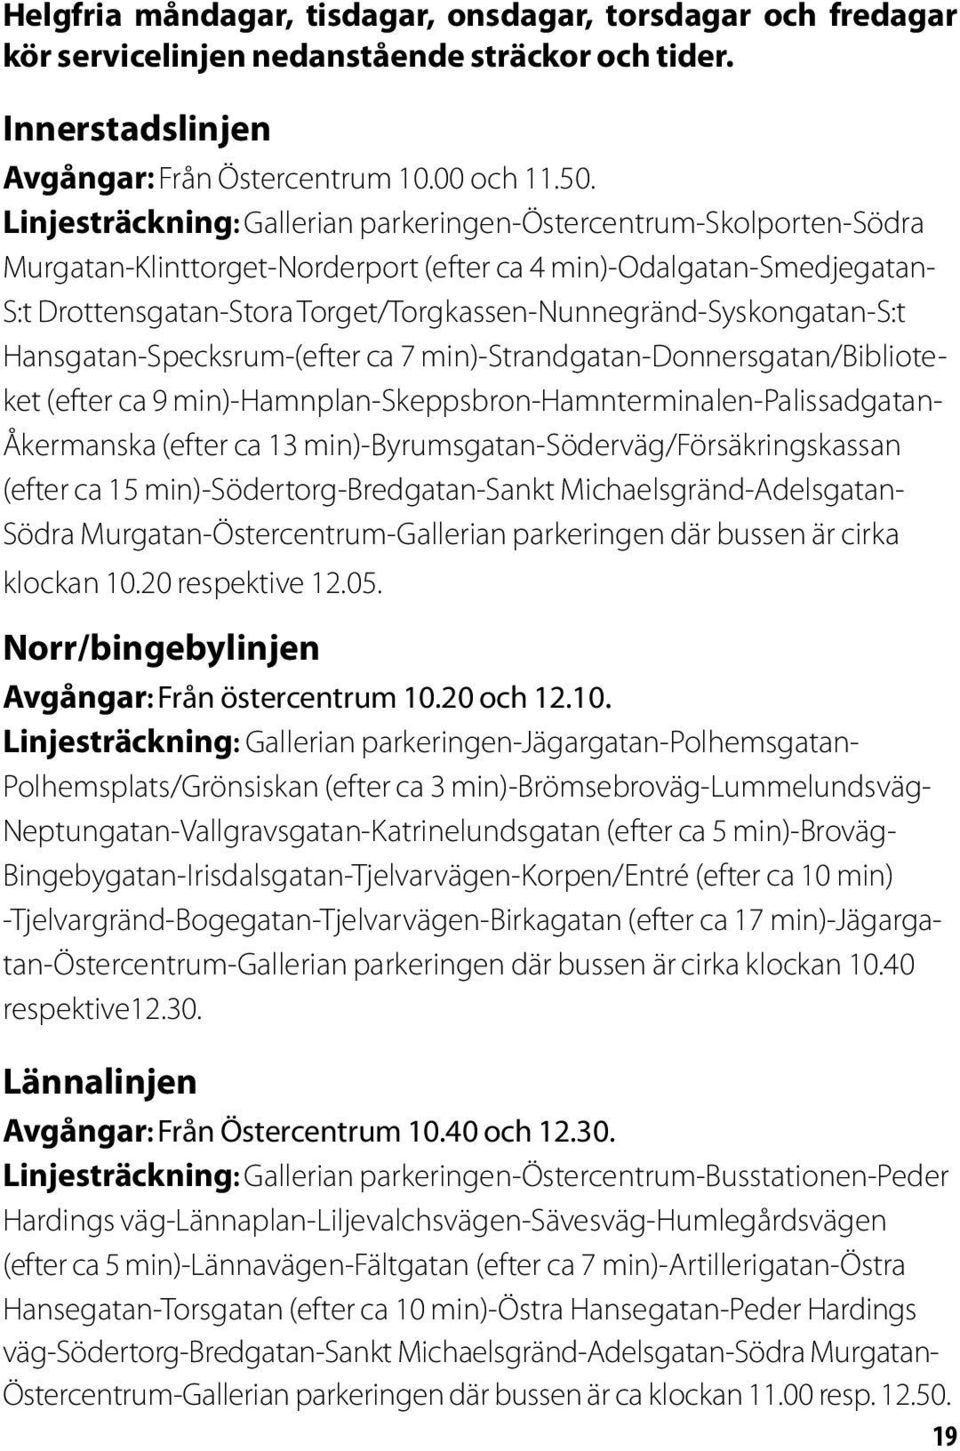 Torget/Torgkassen-Nunnegränd-Syskongatan-S:t Hansgatan-Specksrum-(efter ca 7 min)-strandgatan-donnersgatan/biblioteket (efter ca 9 min)-hamnplan-skeppsbron-hamnterminalen-palissadgatan- Åkermanska